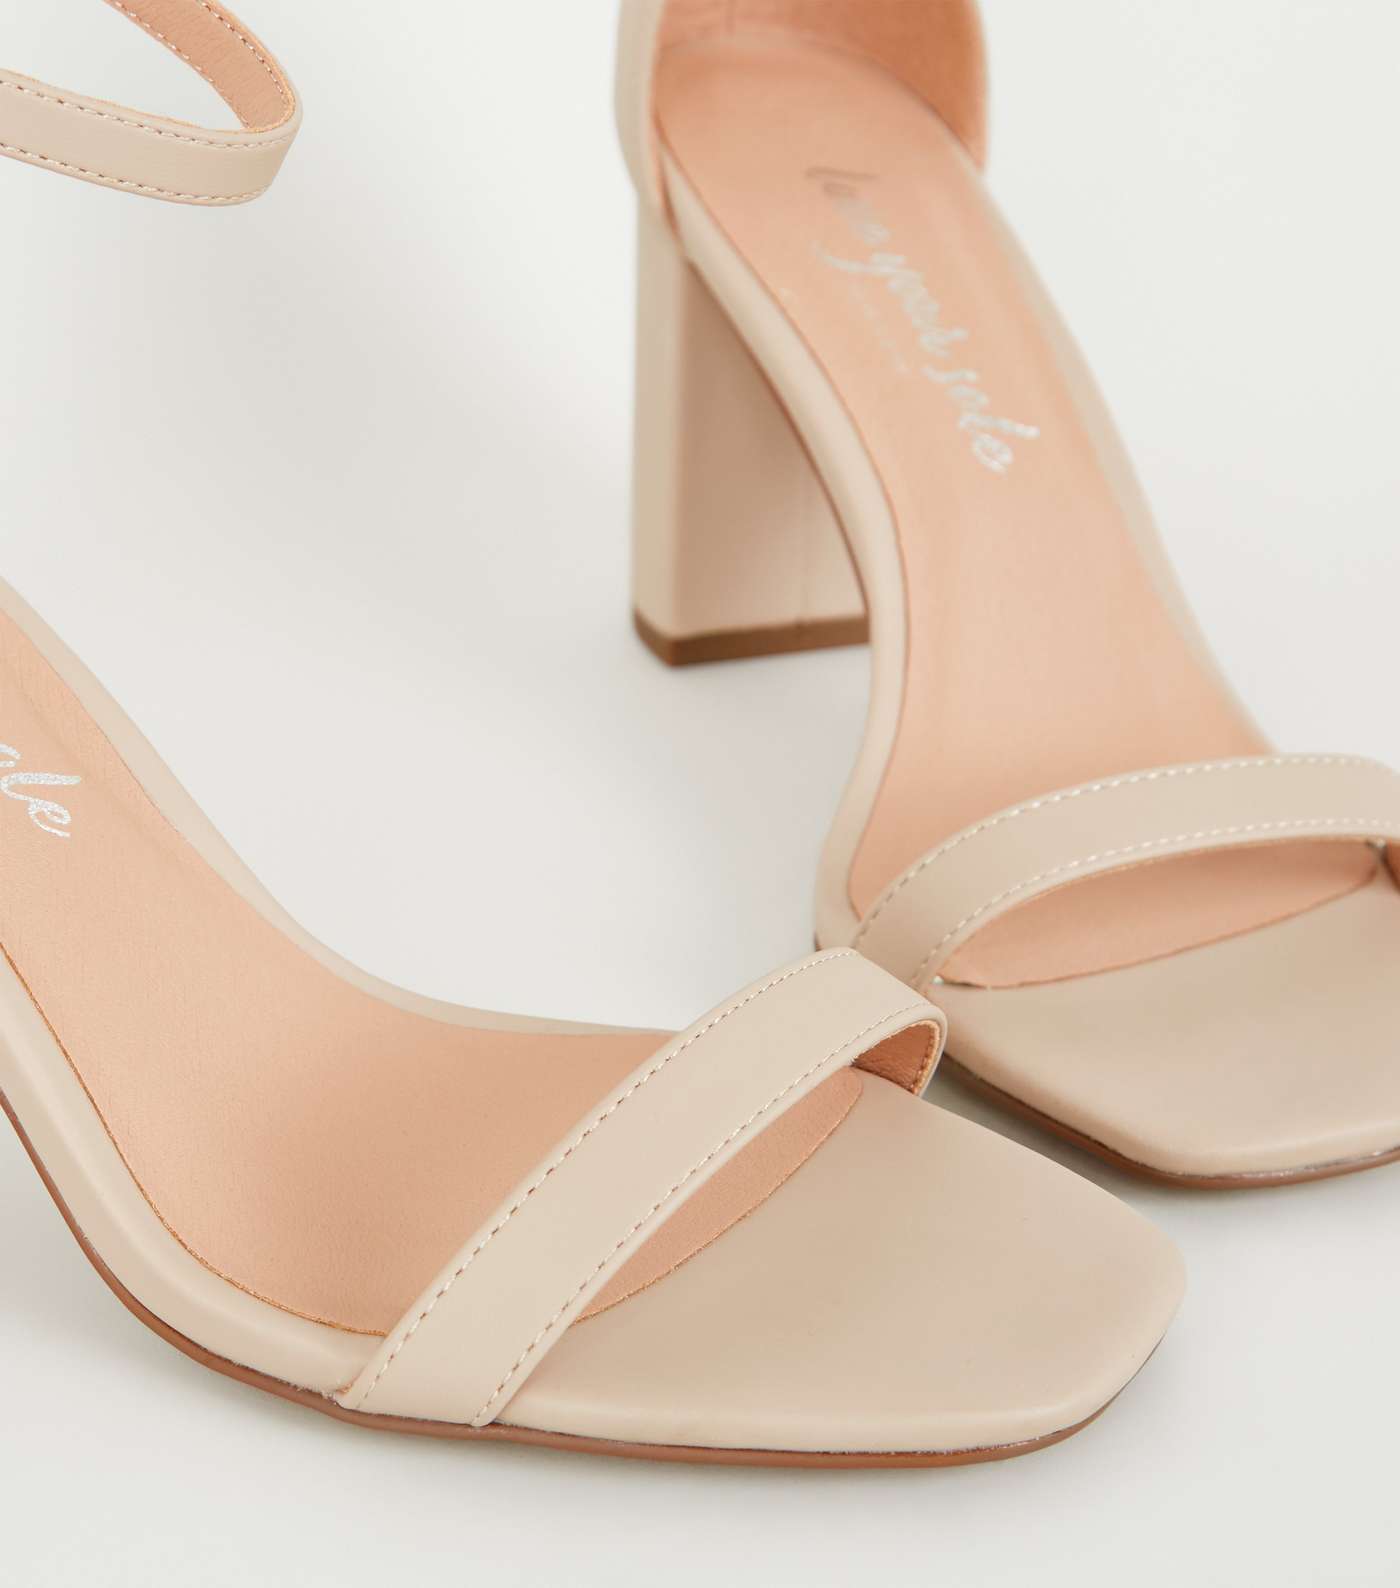 Cream Leather-Look Square Toe Heels Image 4